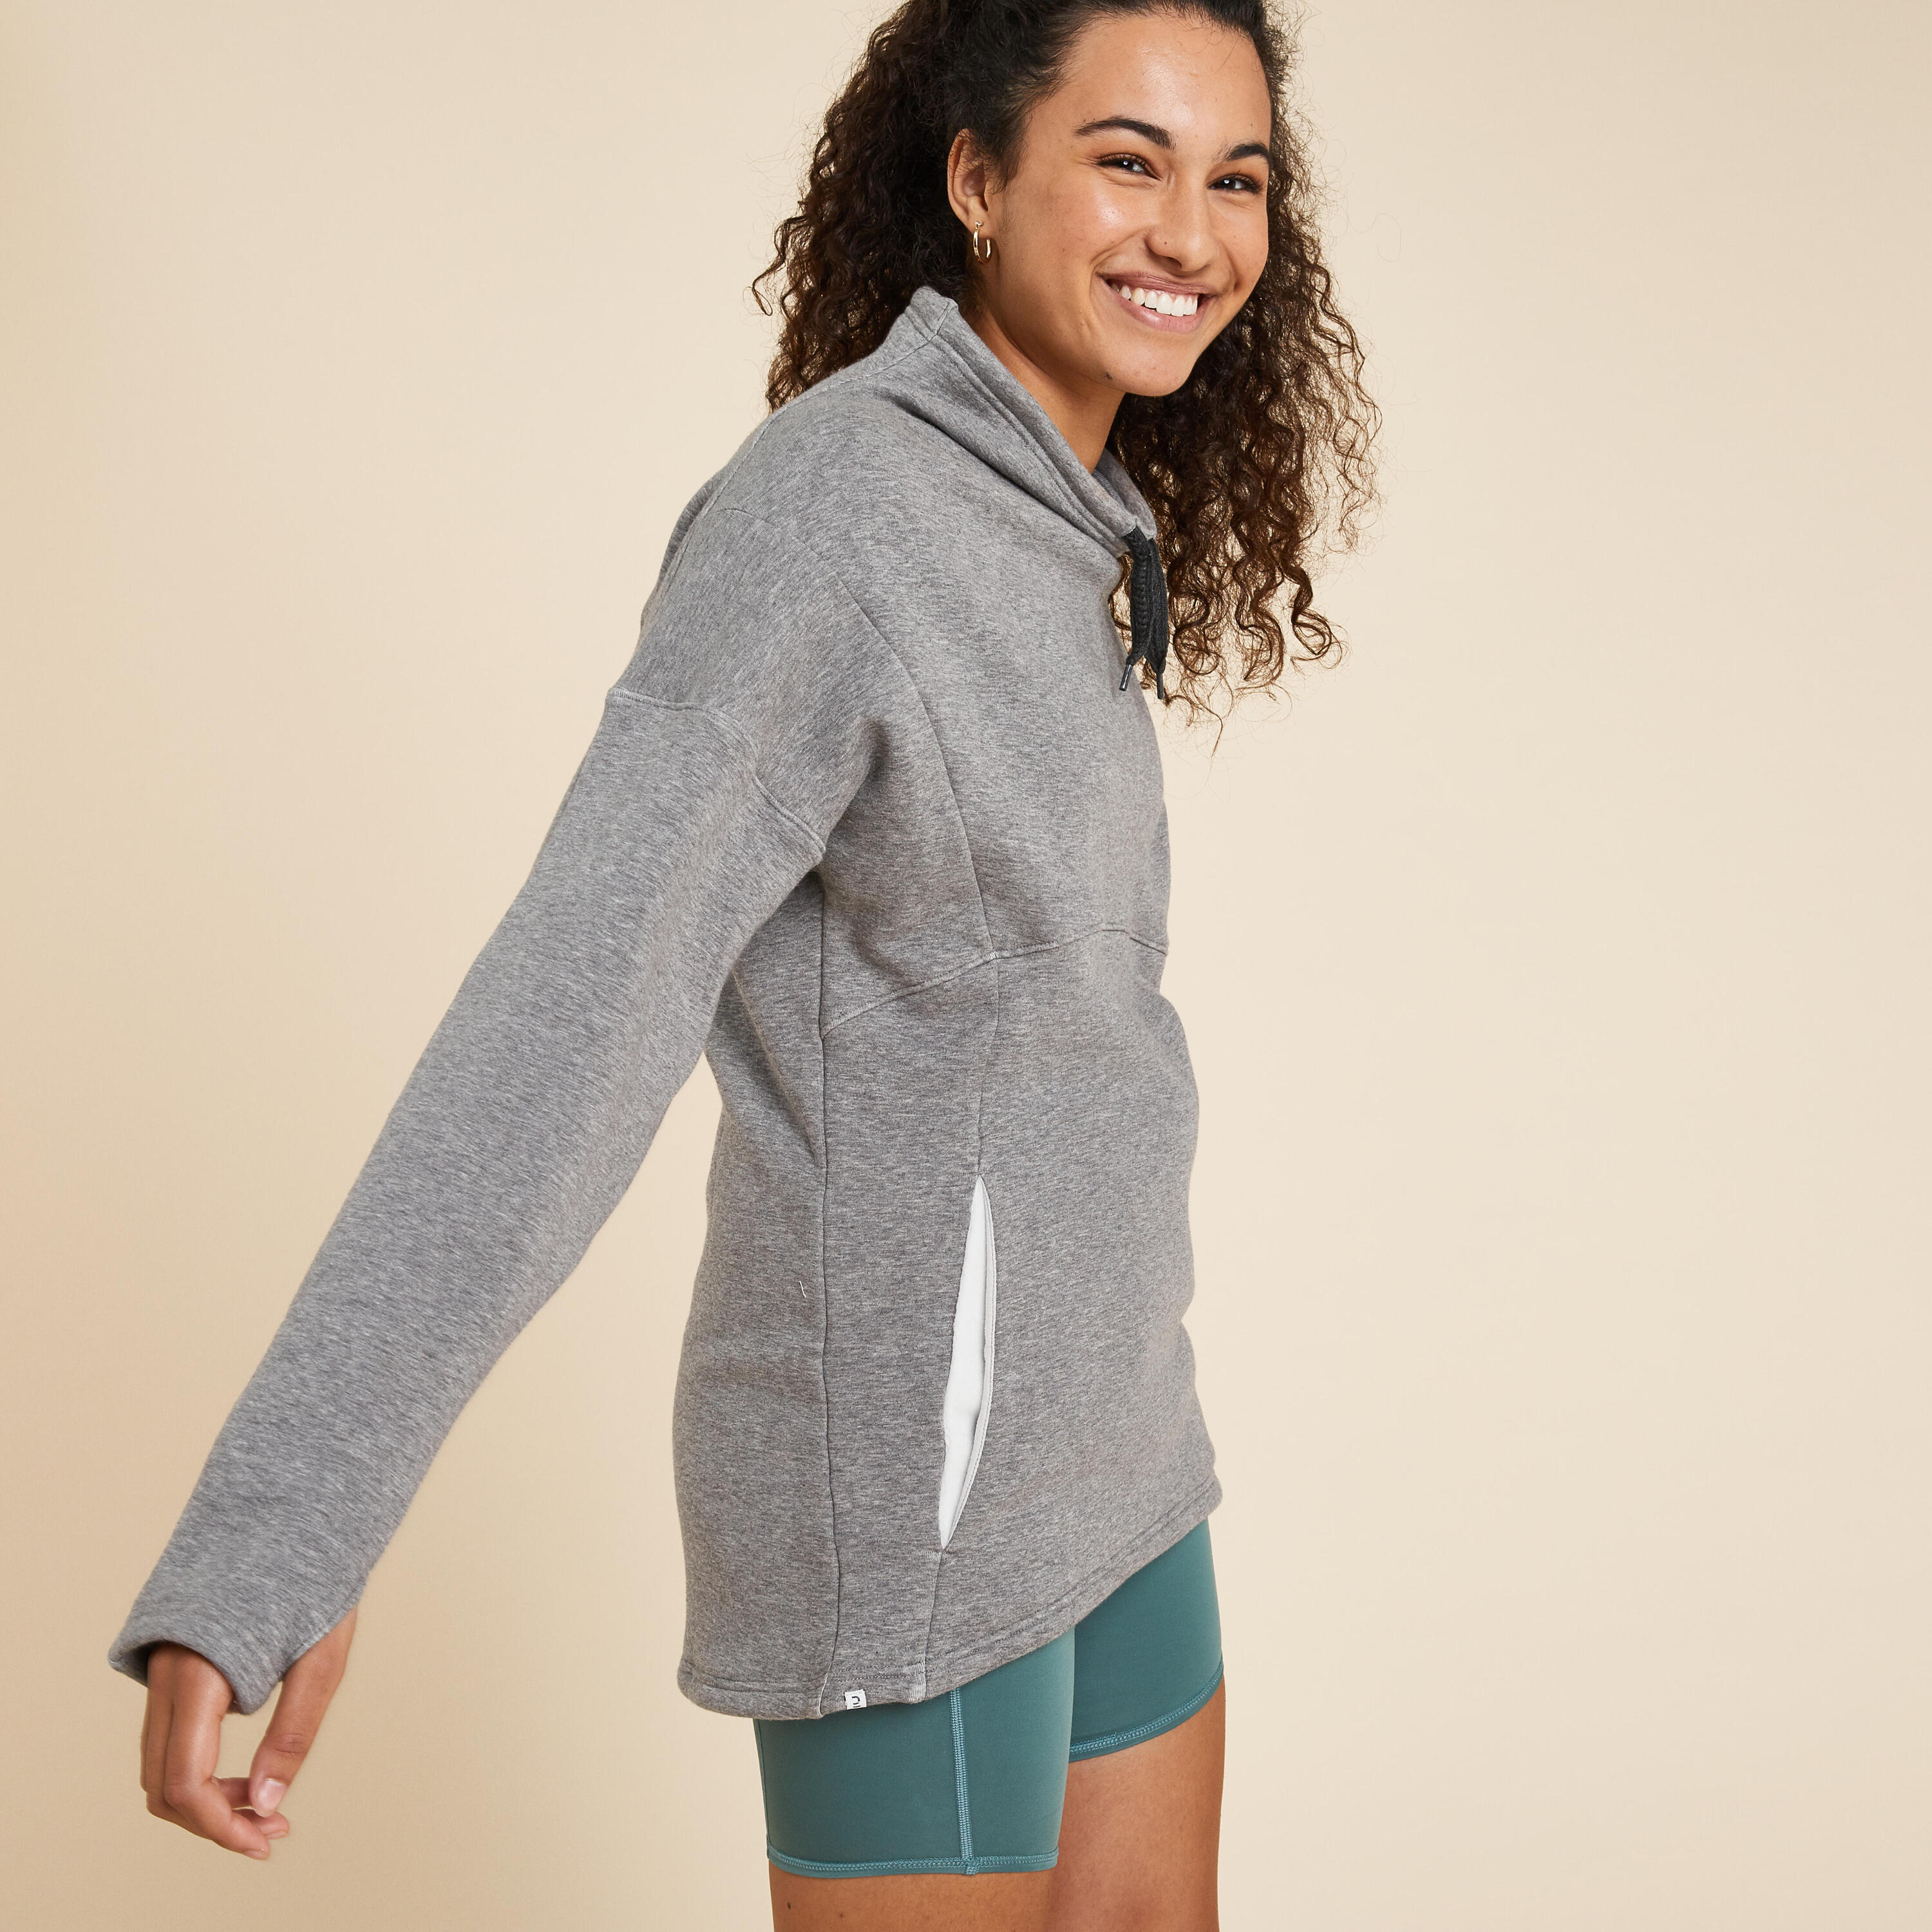 Unisex Yoga Warm Sweatshirt - Grey 4/11